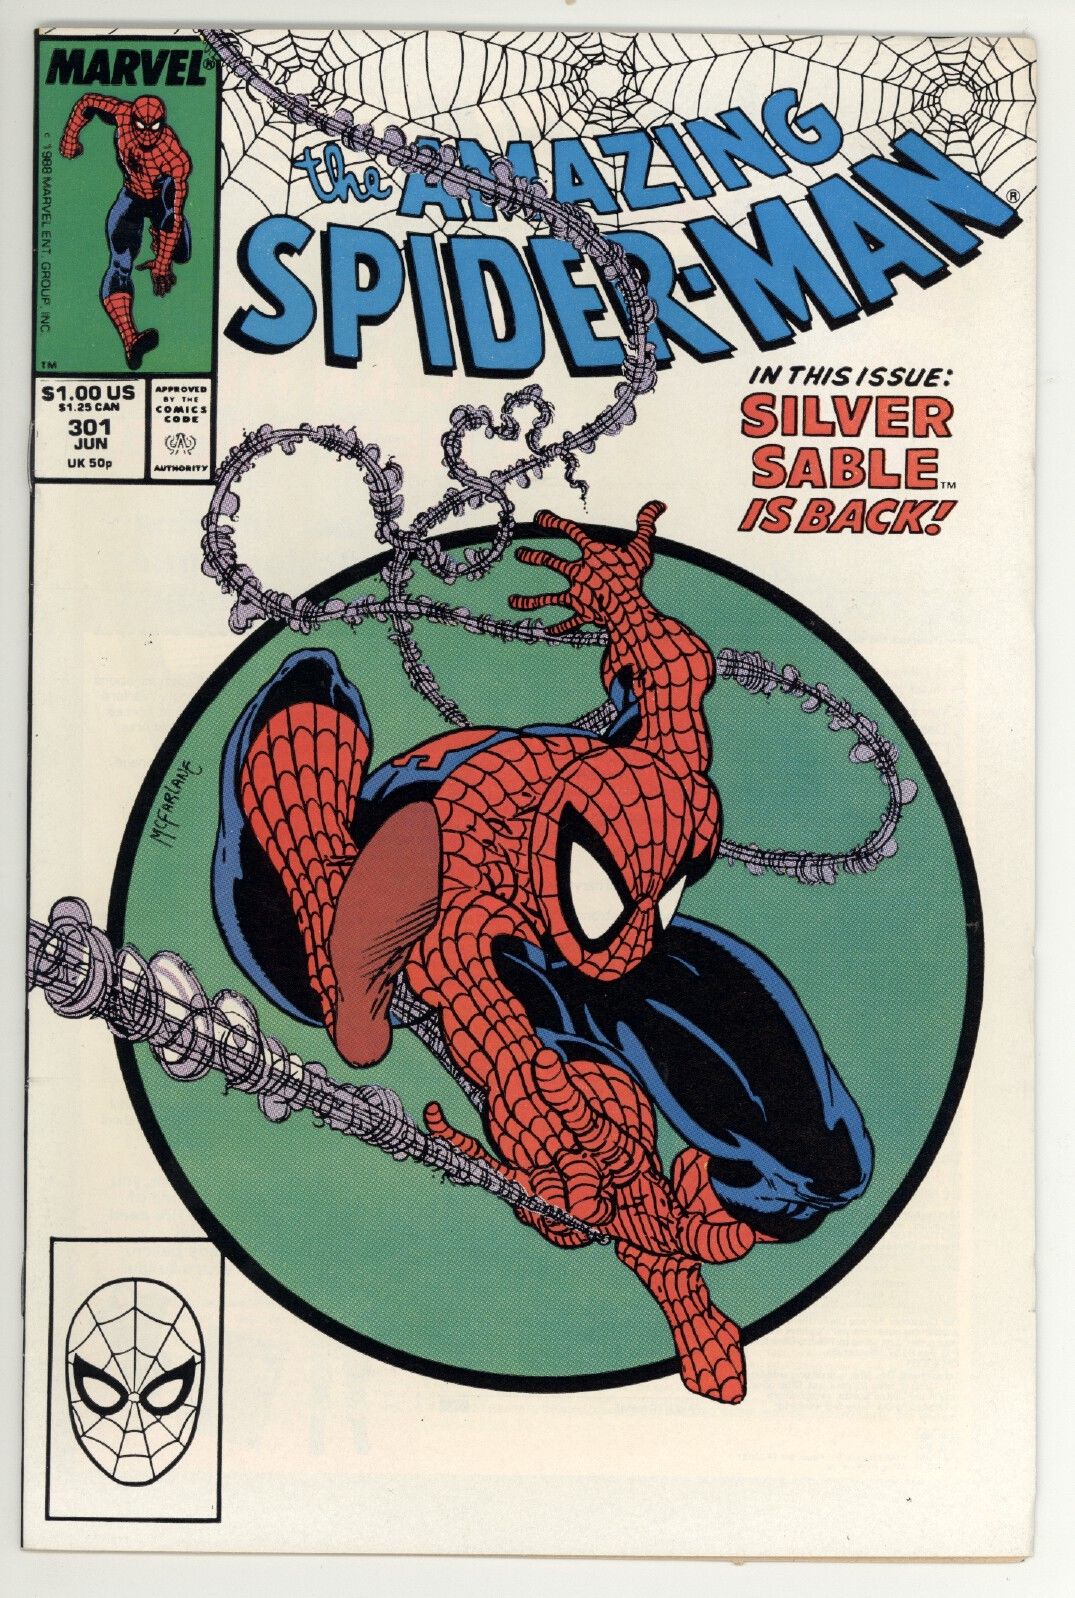 Amazing Spider-Man 301 - McFarlane - Classic Cover - High Grade - 9.4 NM